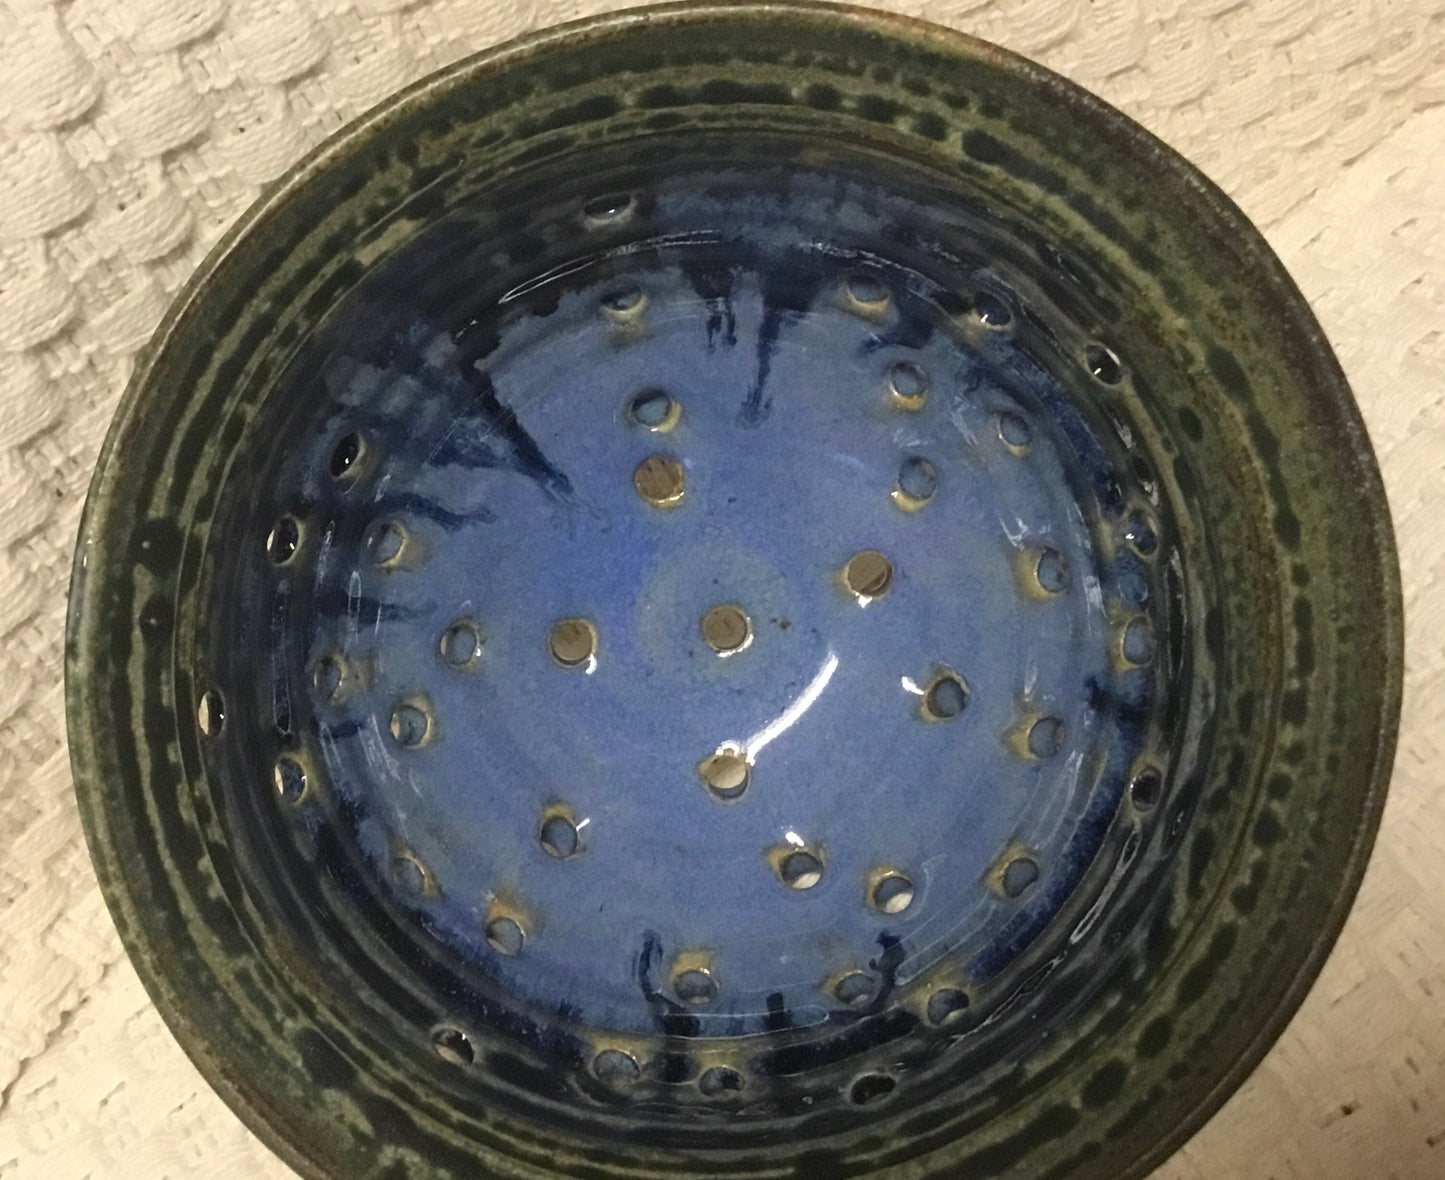 Holman Pottery Standard Size Berry Bowl